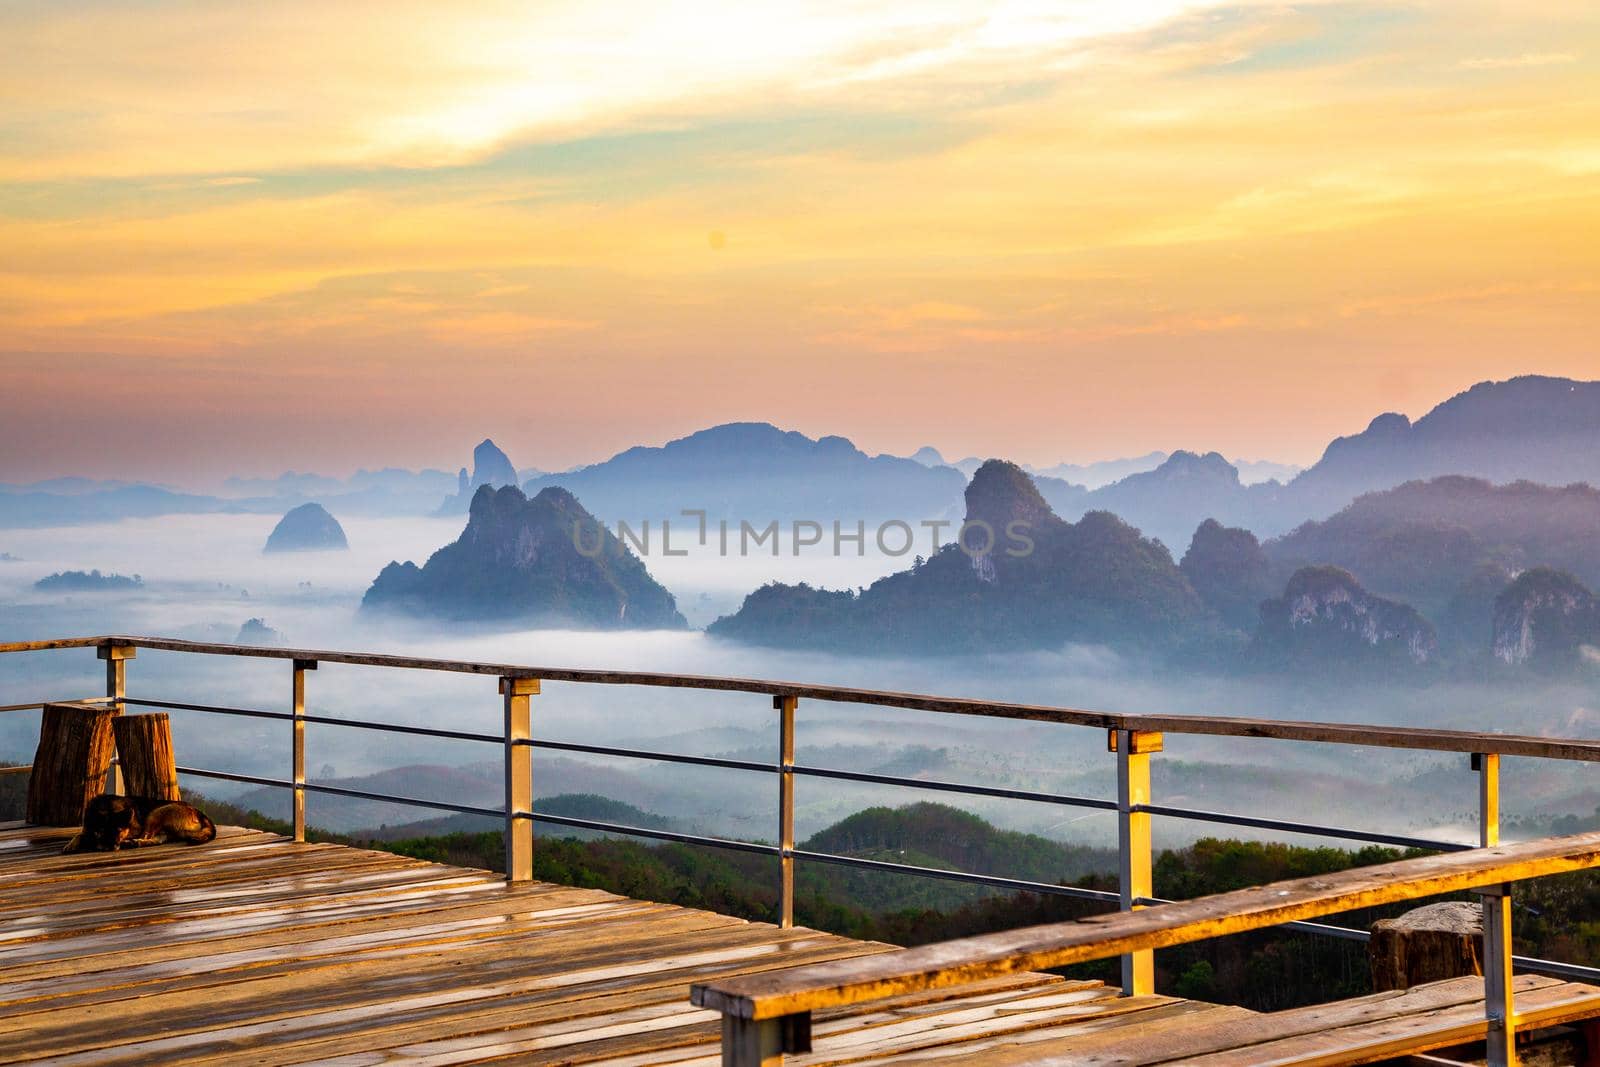 Rice terraces near Doi Tapang viewpoint in Chumphon, Thailand by worldpitou